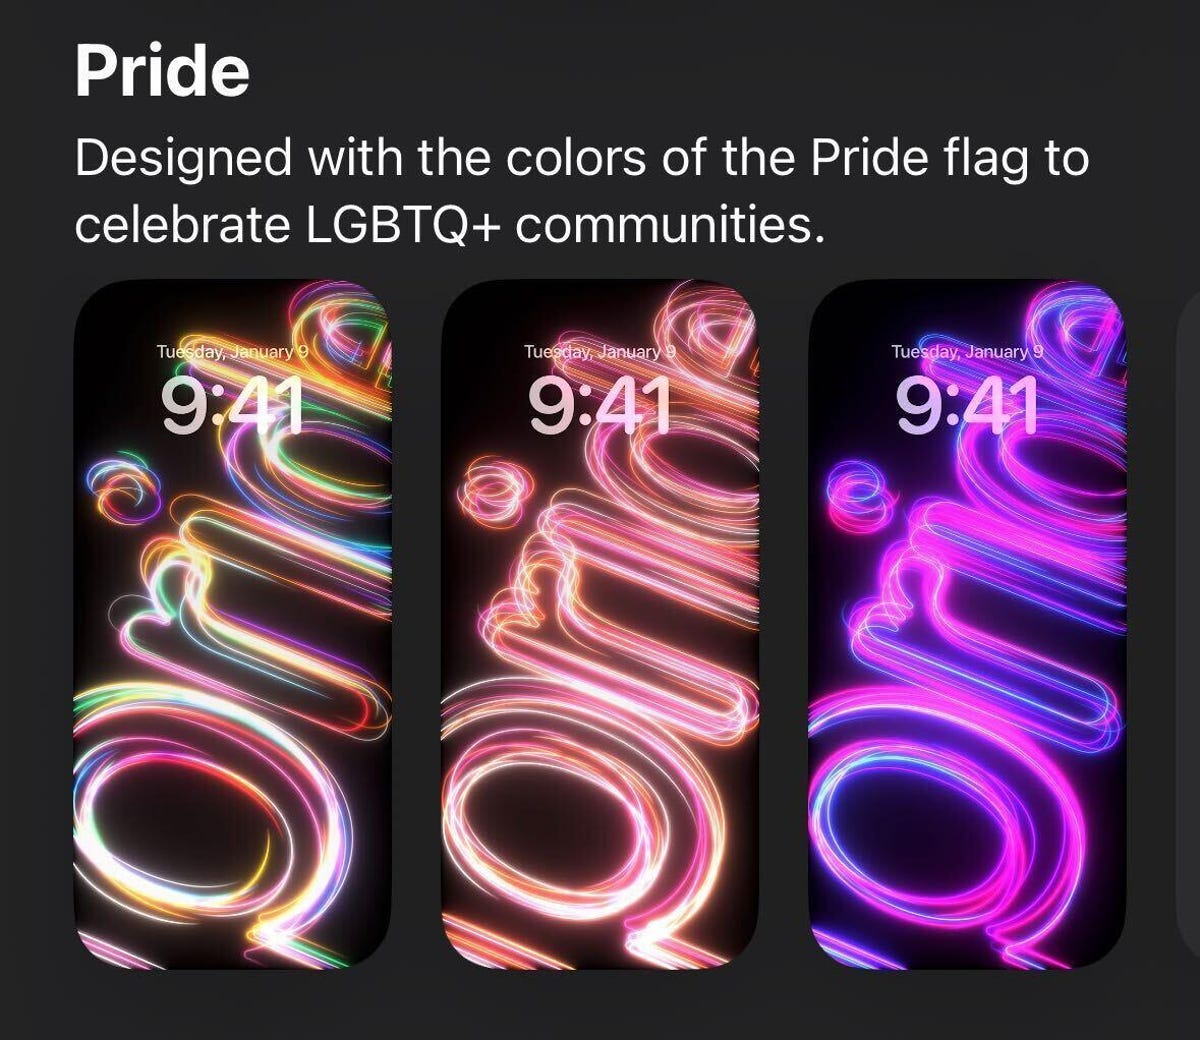 Papéis de parede da Pride Collection para iPhone no iOS 17.5 RC